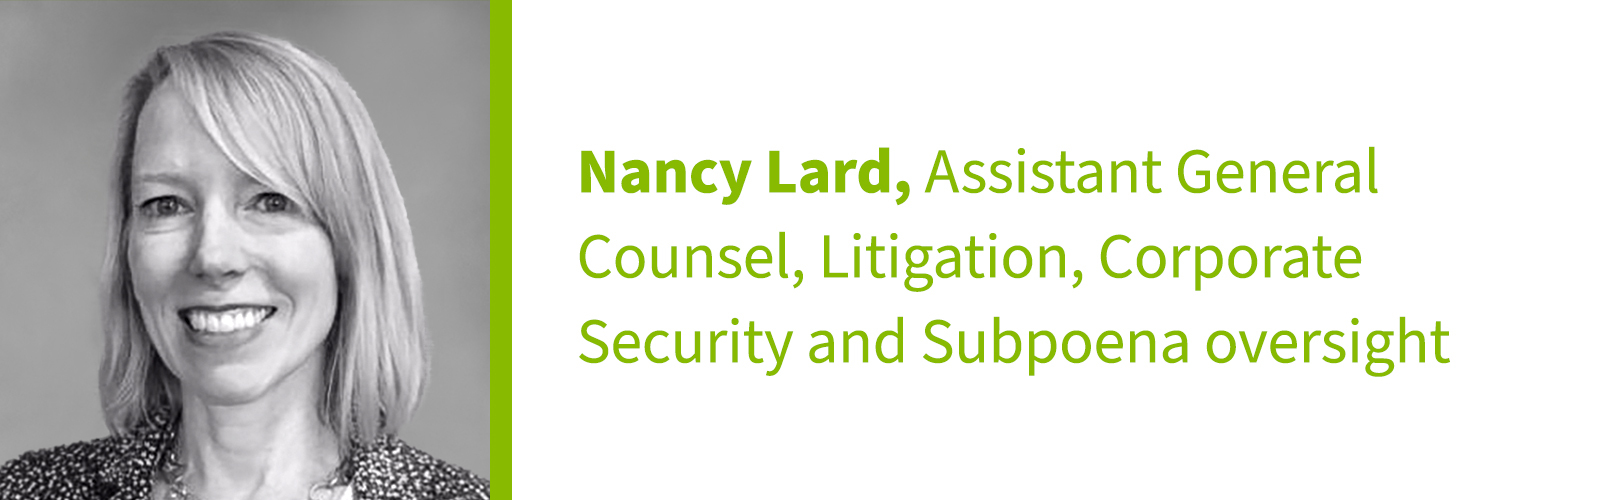 Nancy Lard headshot and title